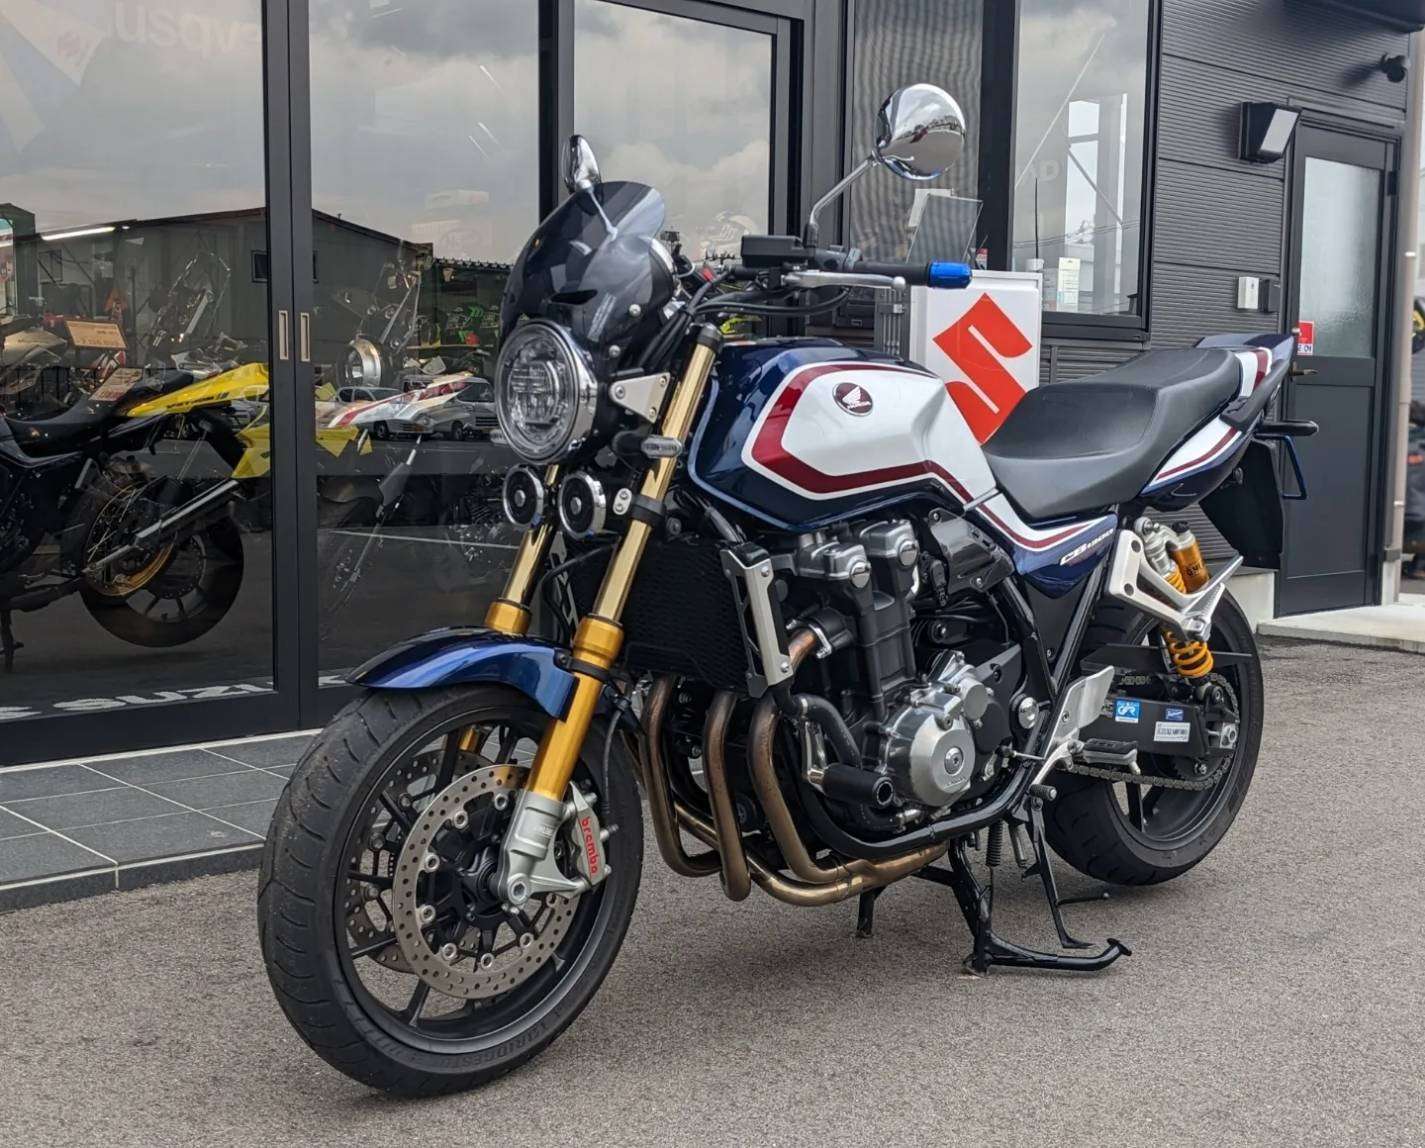 CB1300 SUPER FOUR SP 2019年式 入荷 山形県バイクショップ SUZUKI MOTORS